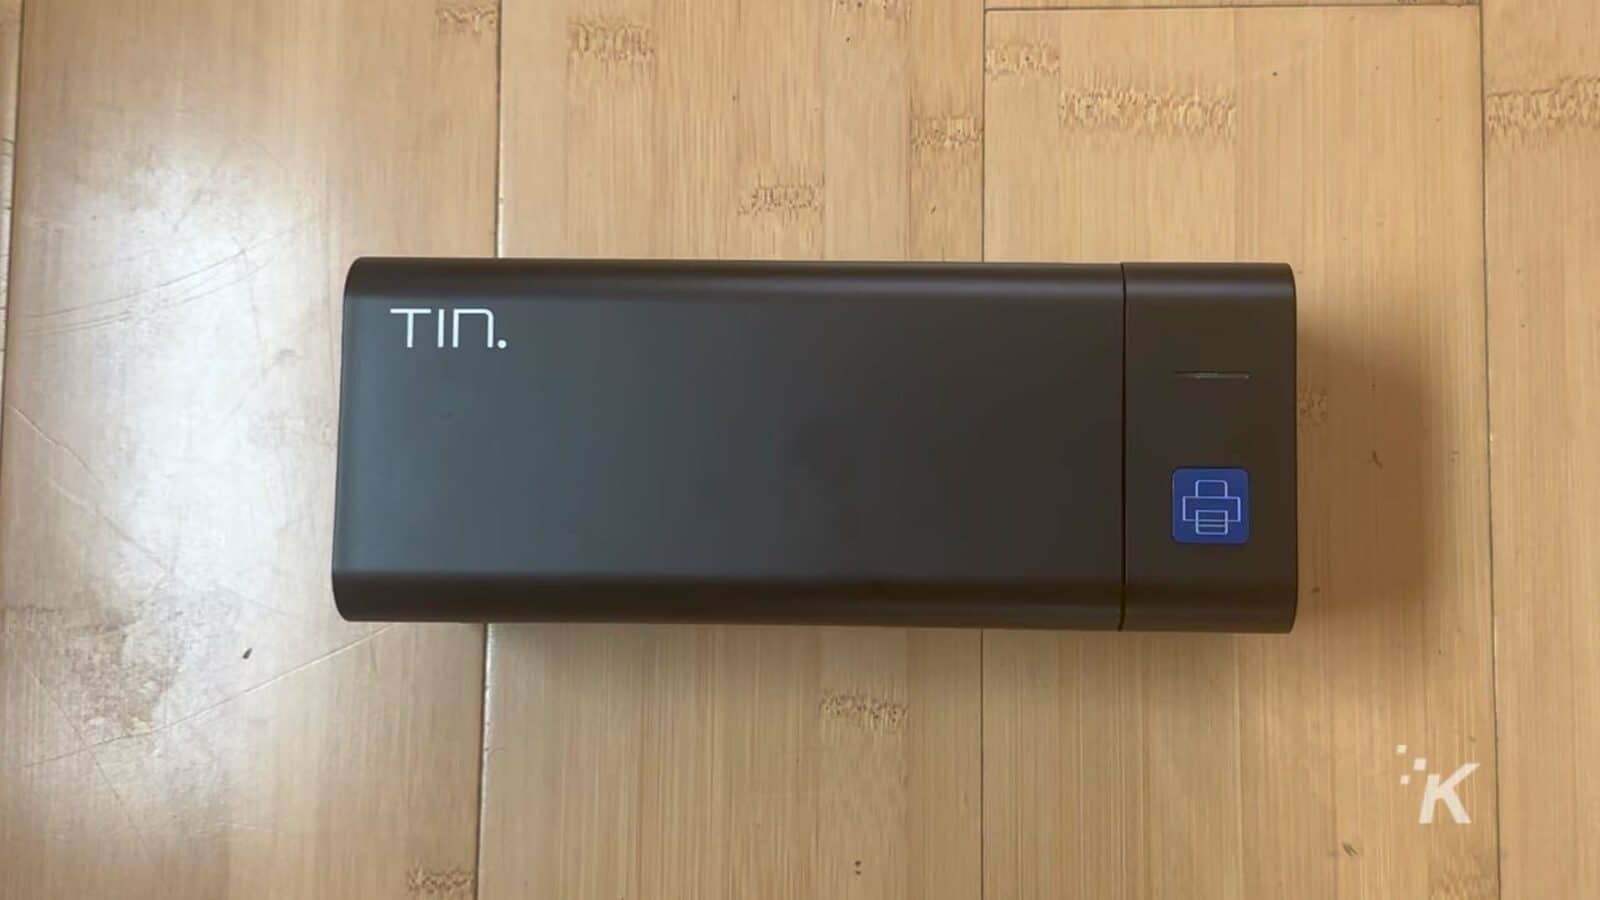 Un dispositivo rectangular negro se asienta sobre una superficie de madera.